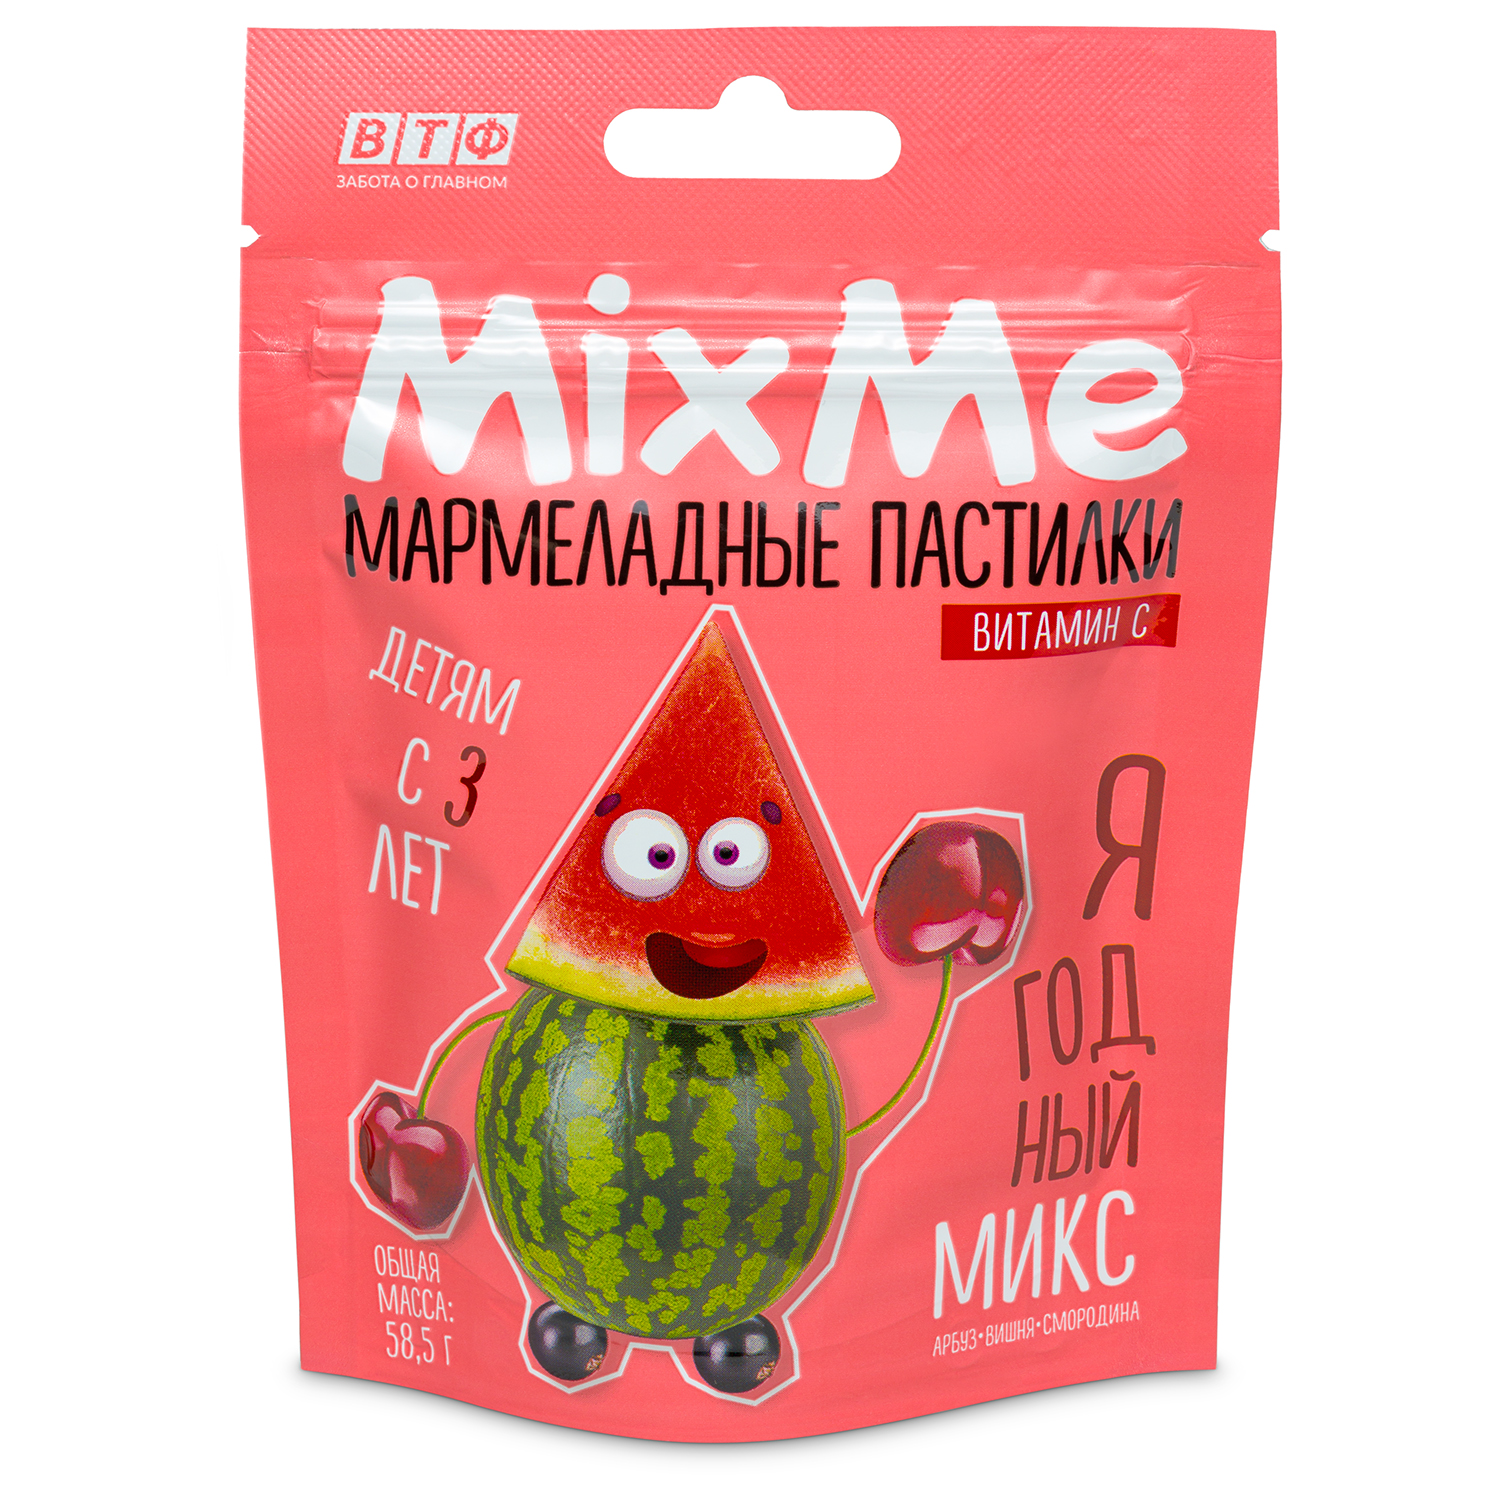 Биологически активная добавка MixMe Мармелад Ягодный микс вит С вишня-смородина-арбуз 58.5г - фото 1